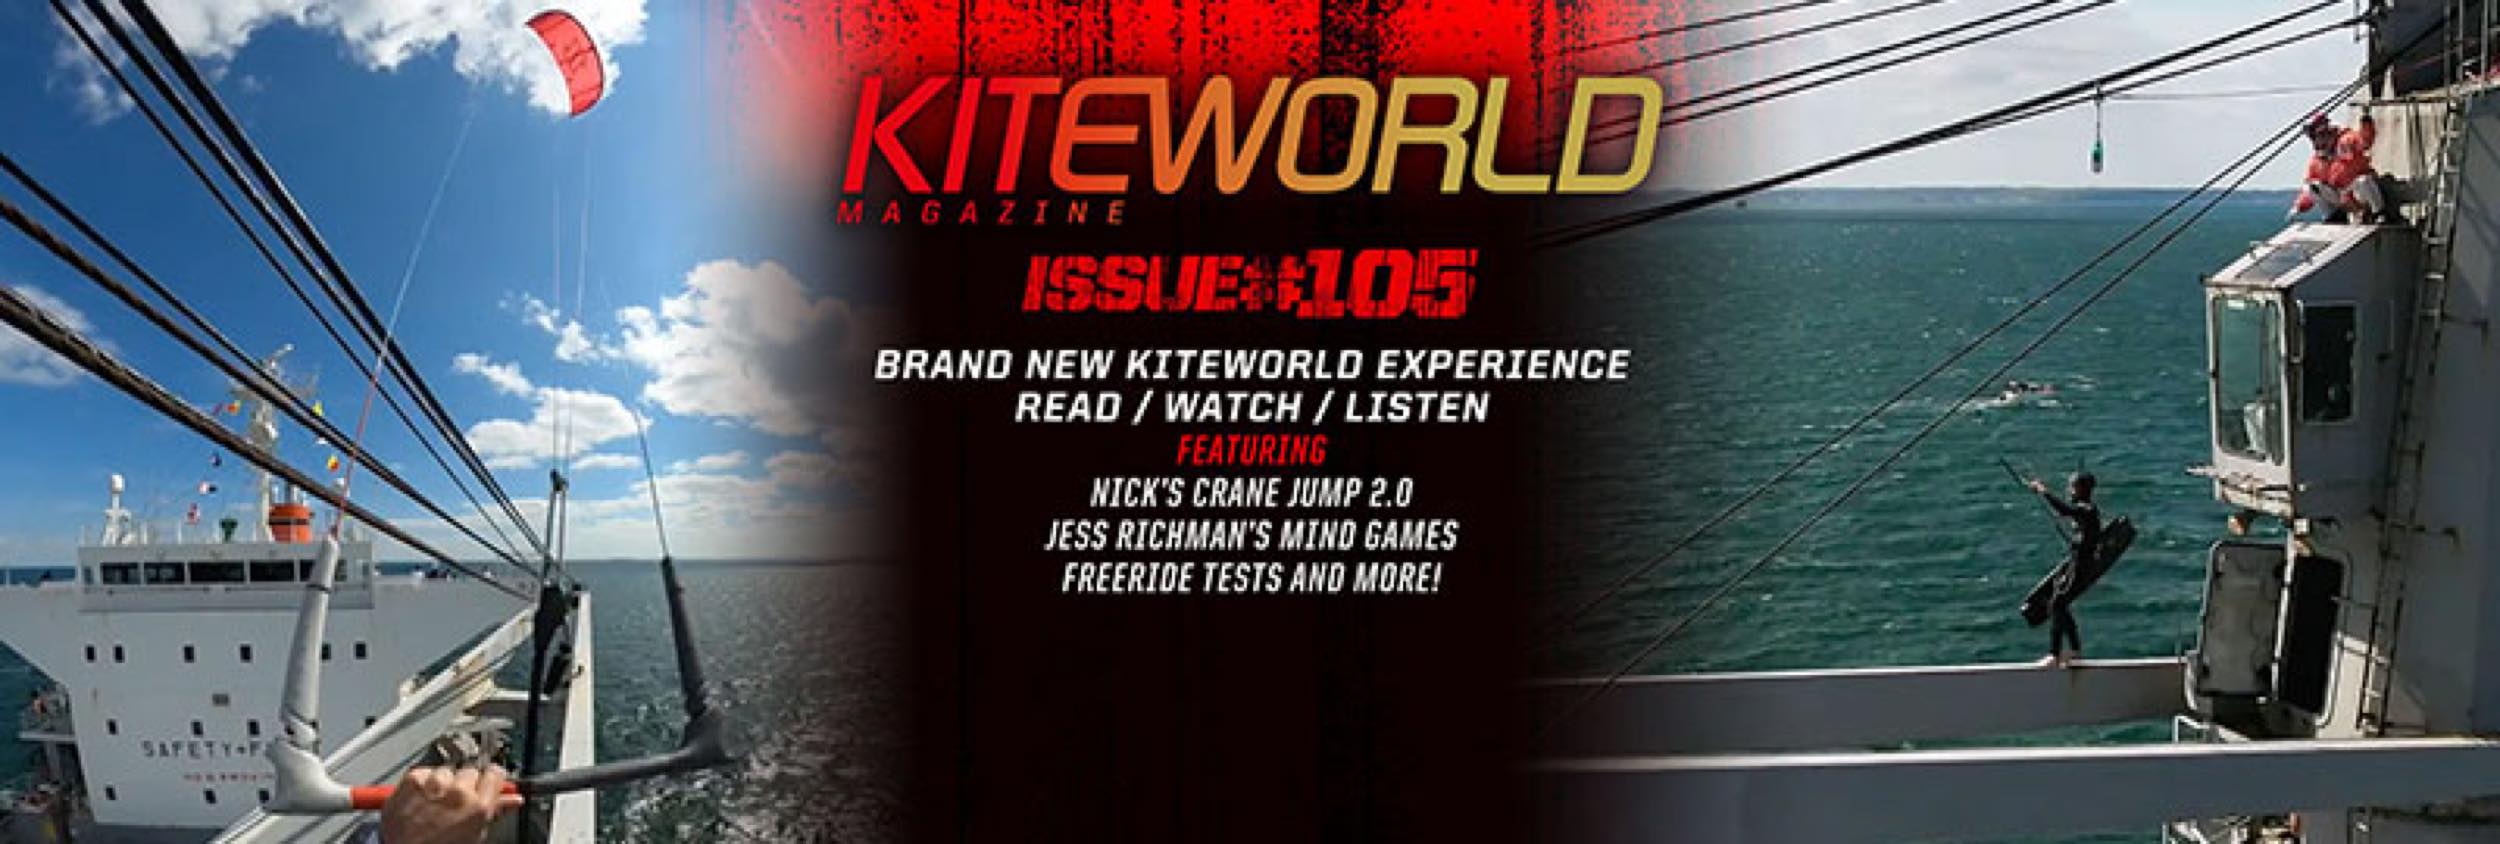 Free Kiteworld Issue 105